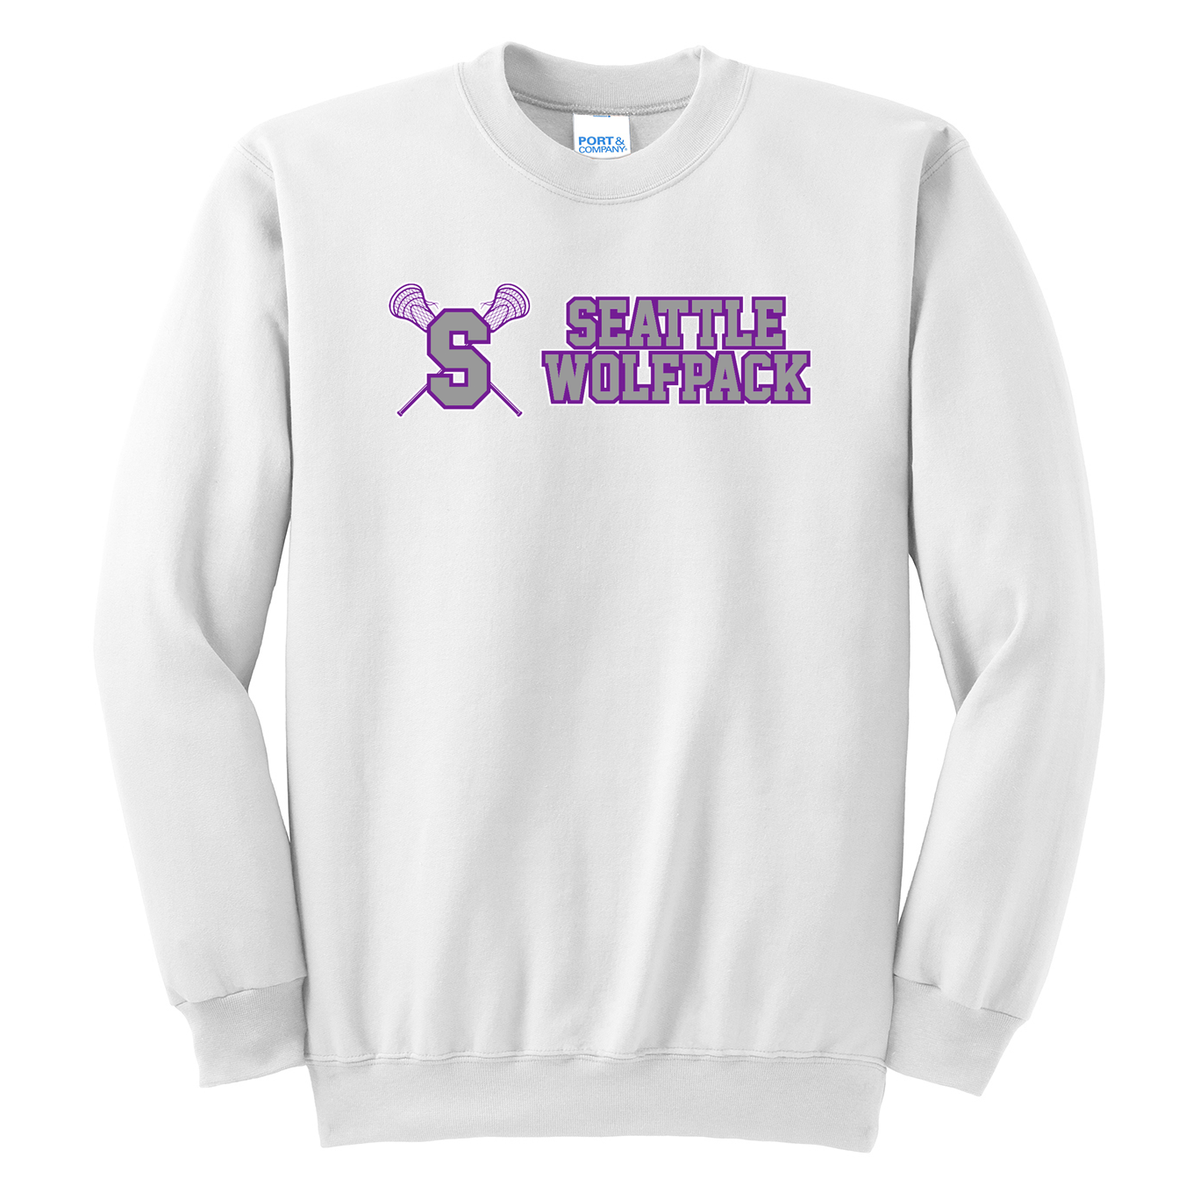 Seattle Wolfpack Crew Neck Sweater